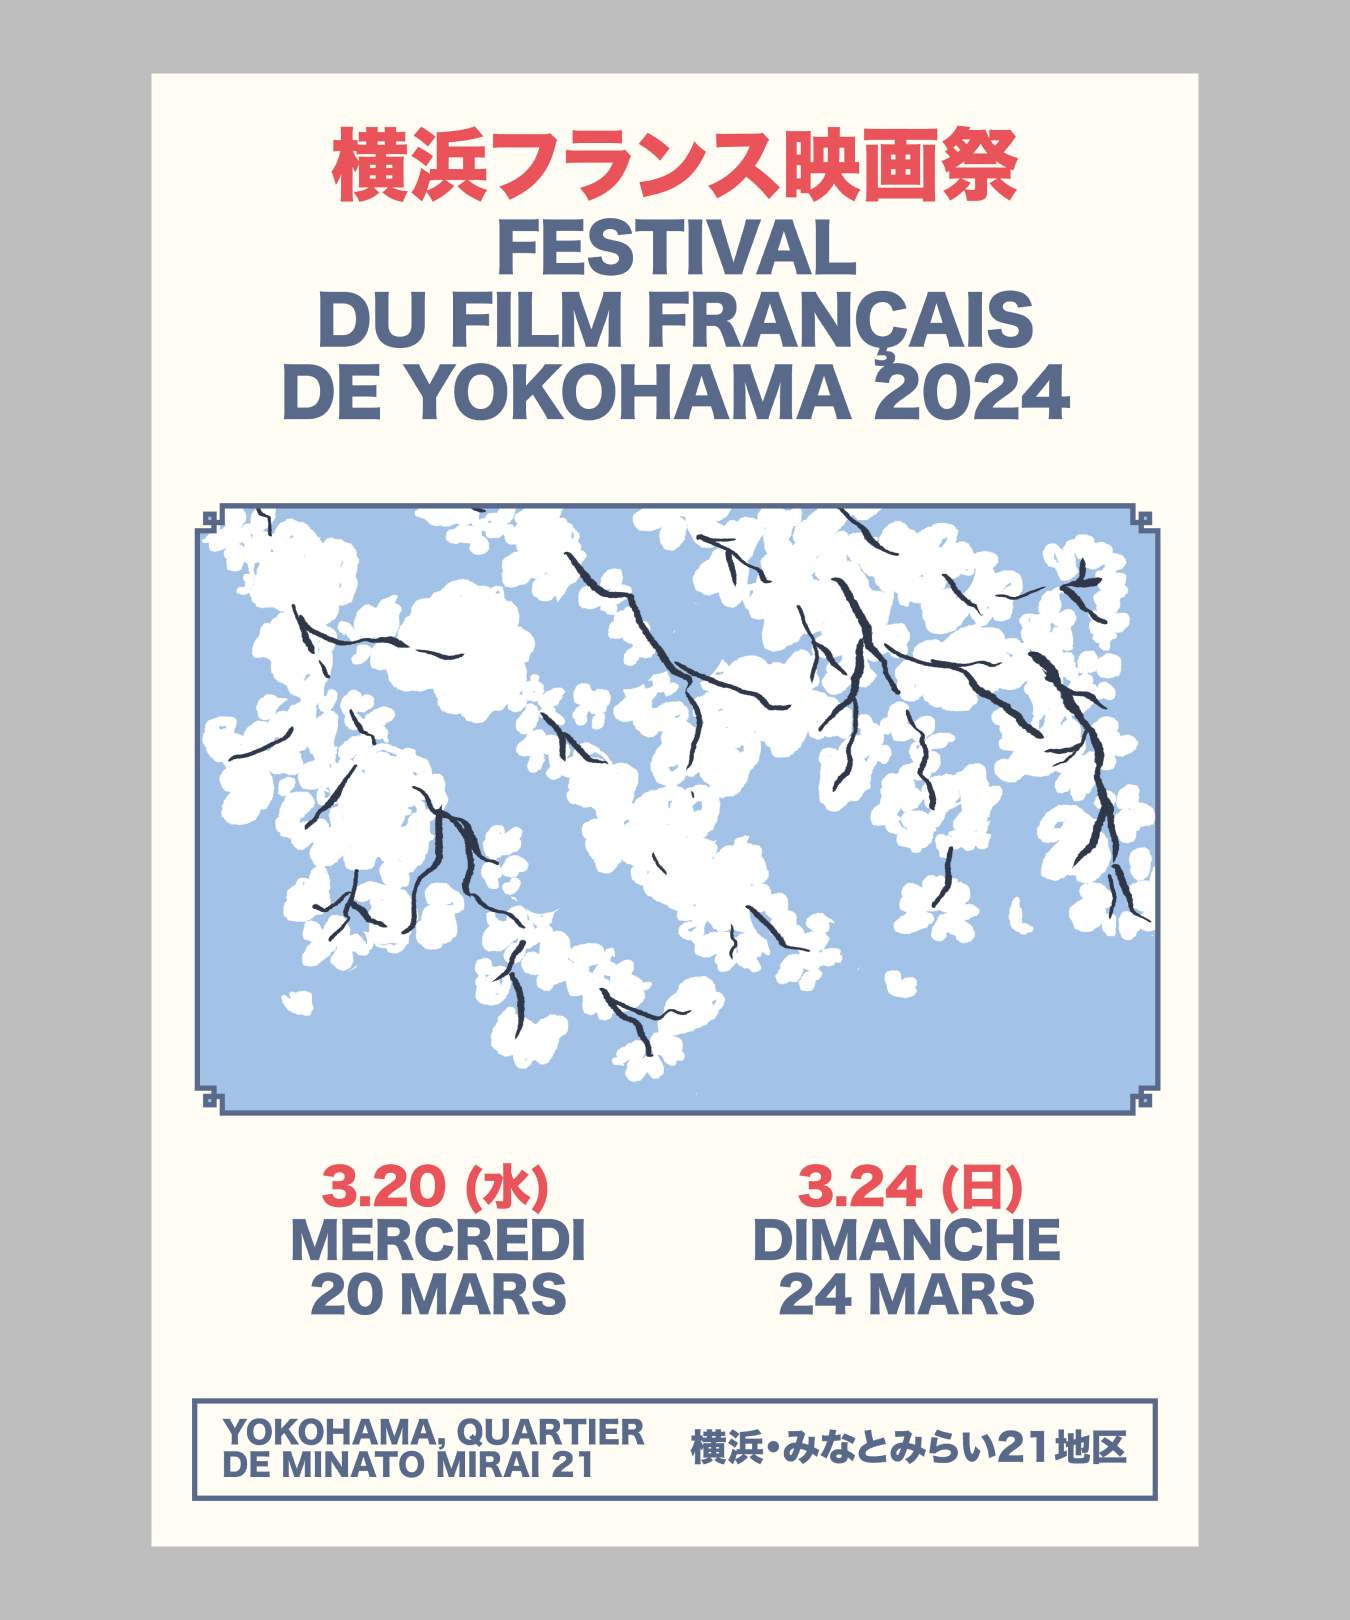 JESSY MOREIRA | YOKOHAMA FRENCH FESTIVAL 2024